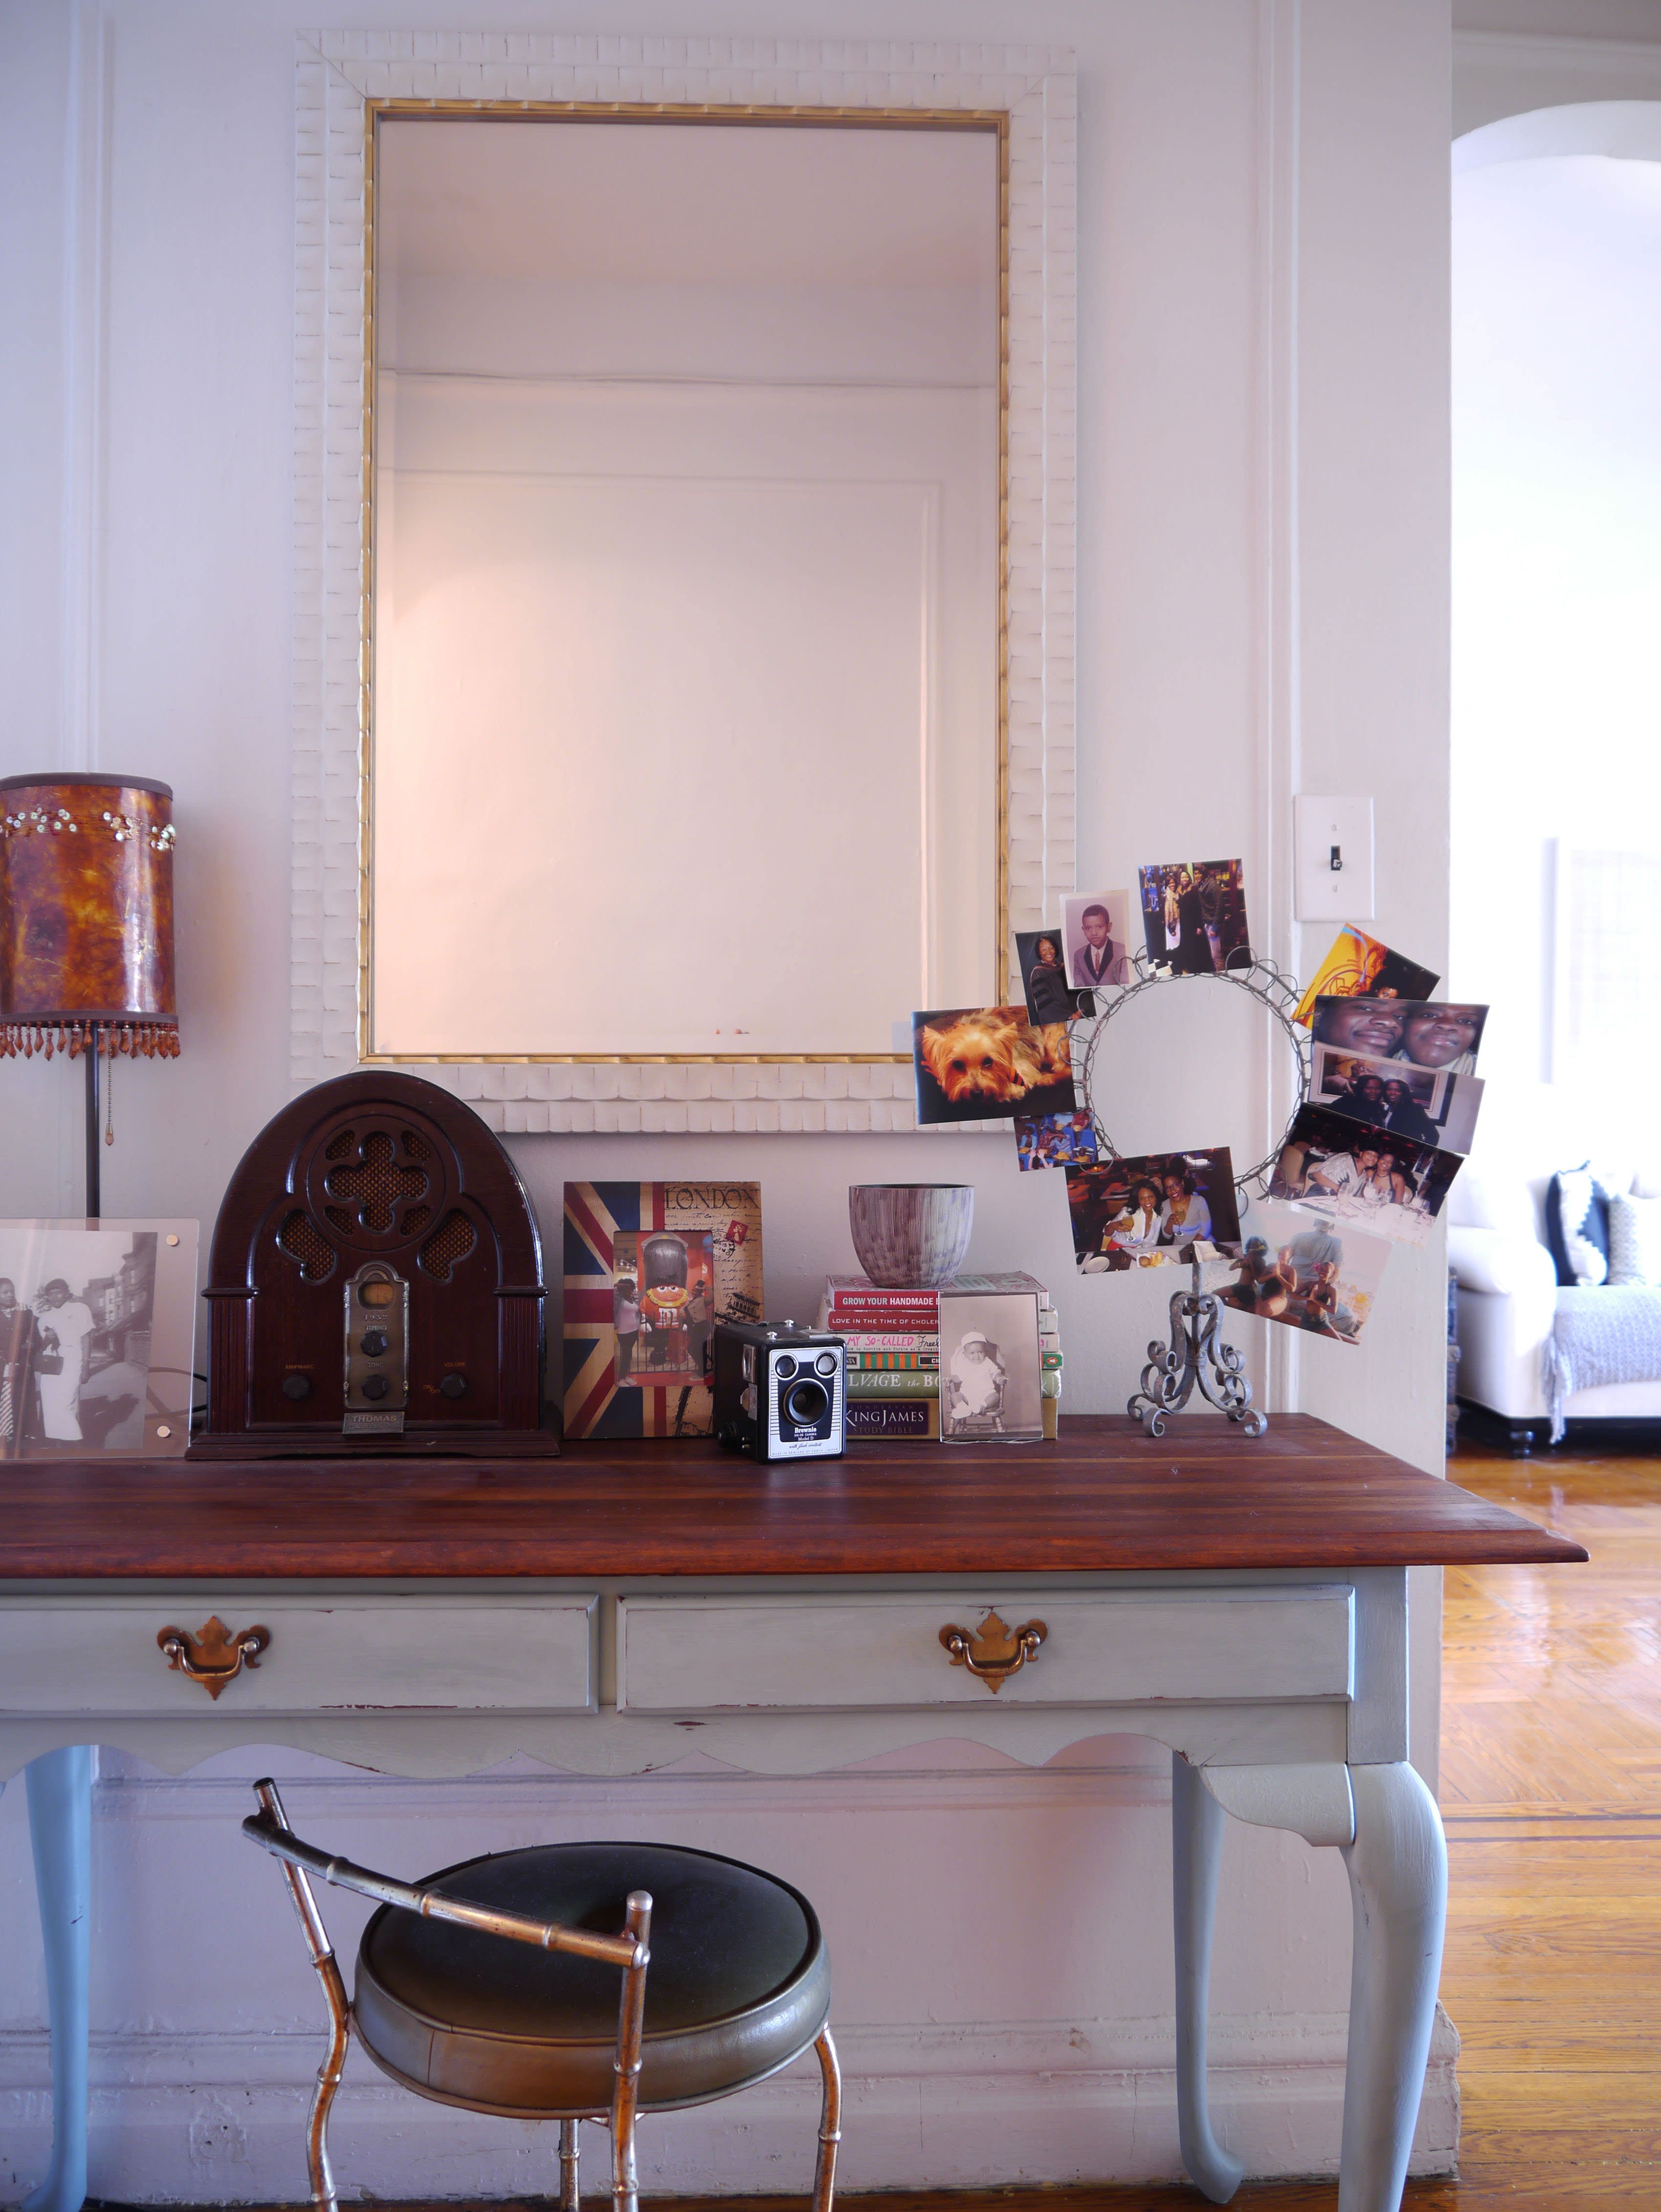 House Tour: An Antique-Chic Prewar Brooklyn Apartment | Apartment Therapy